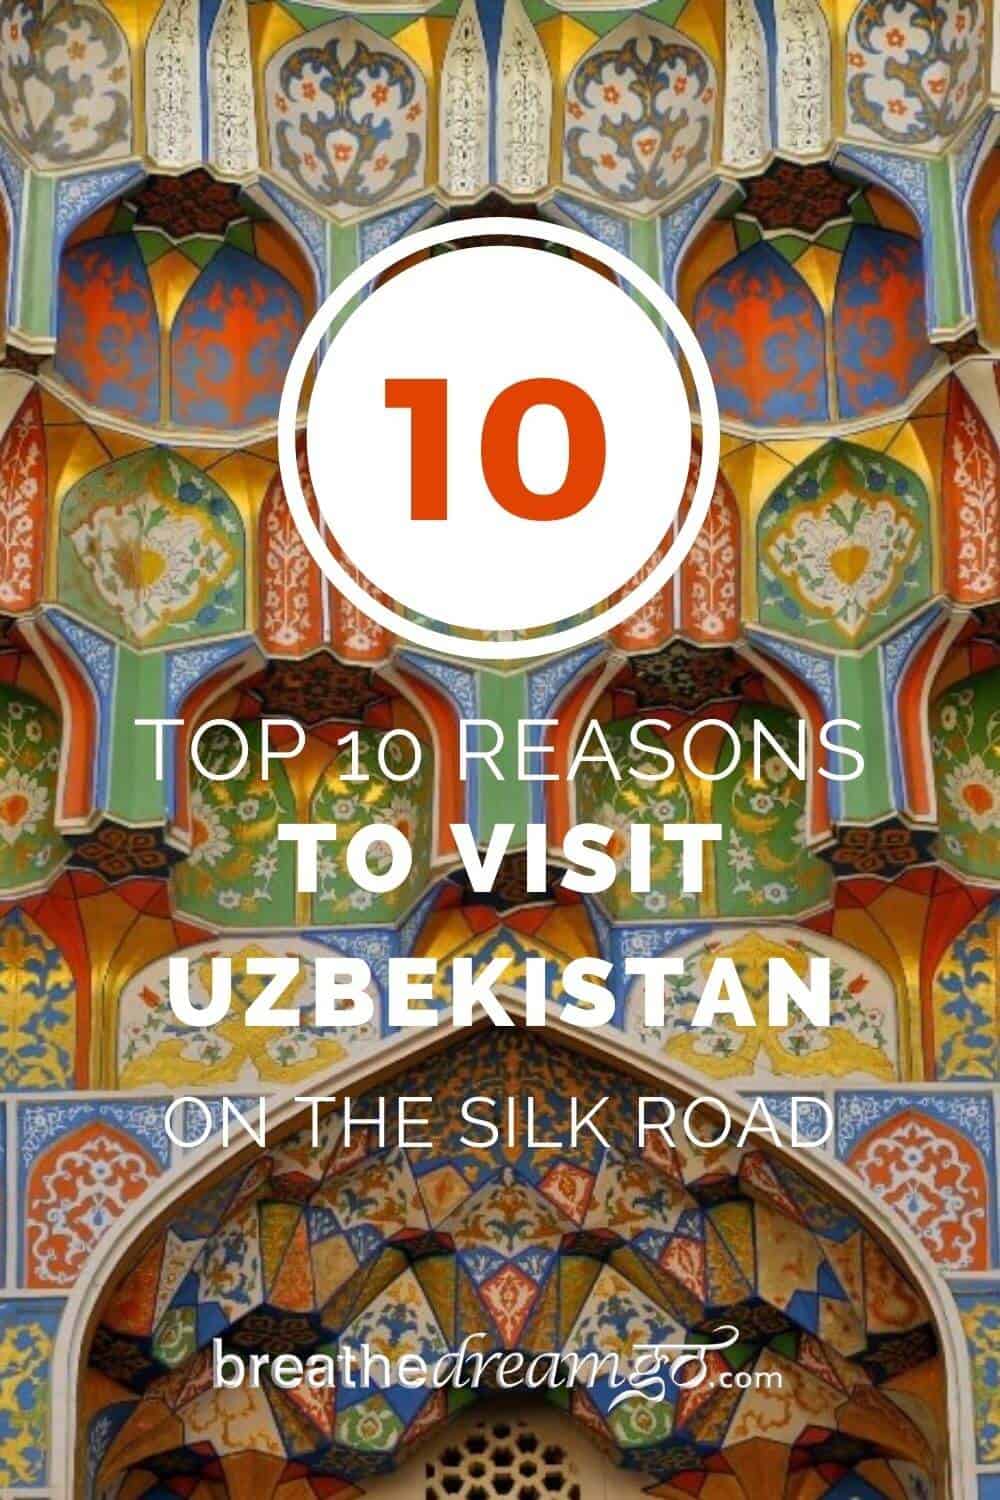 Top 10 reasons to visit Uzbekistan